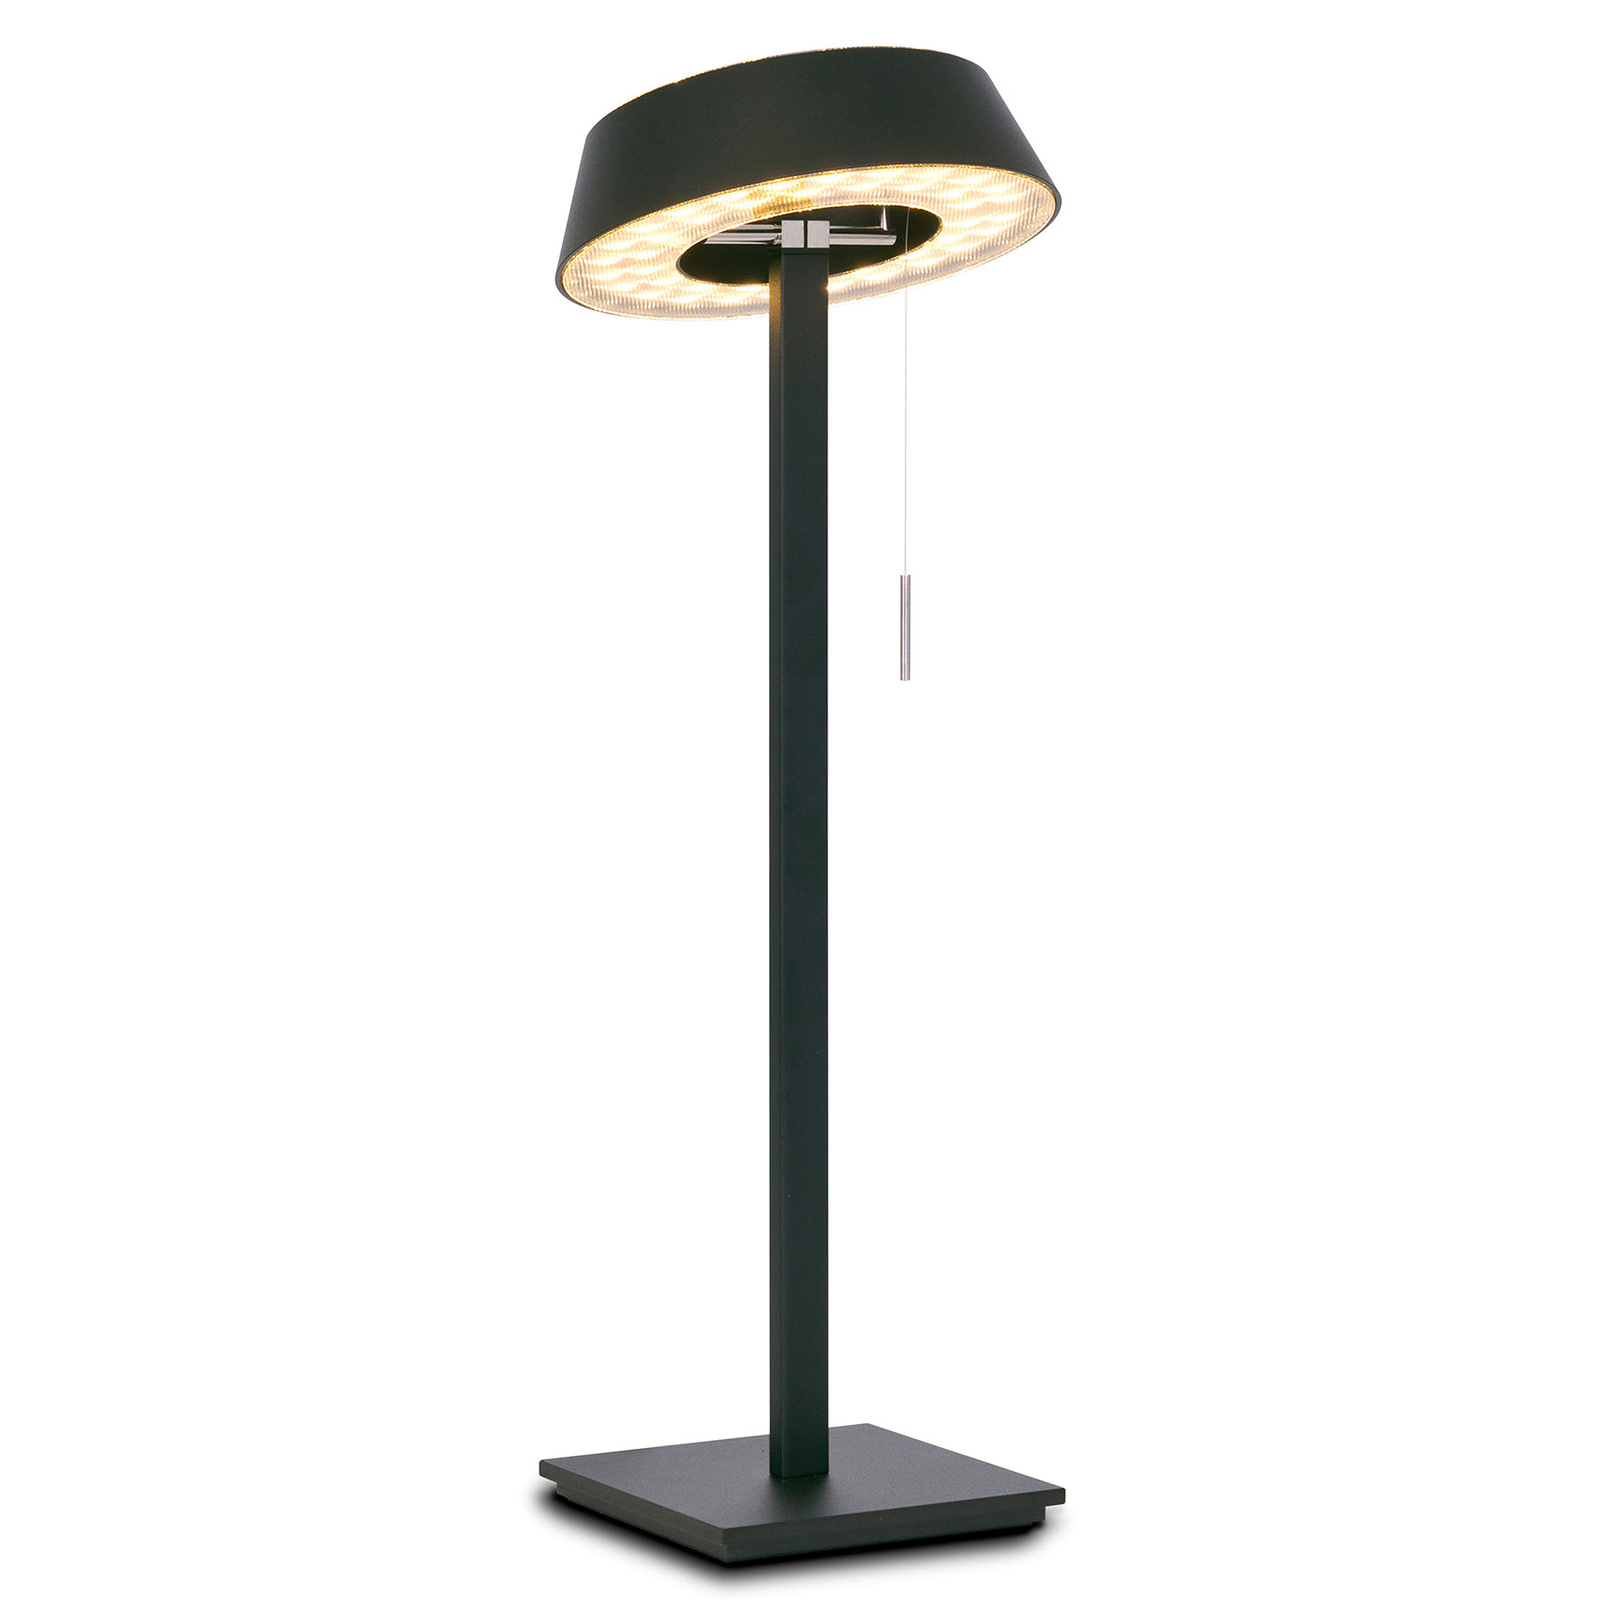 OLIGO Glance lampe à poser LED noire mate